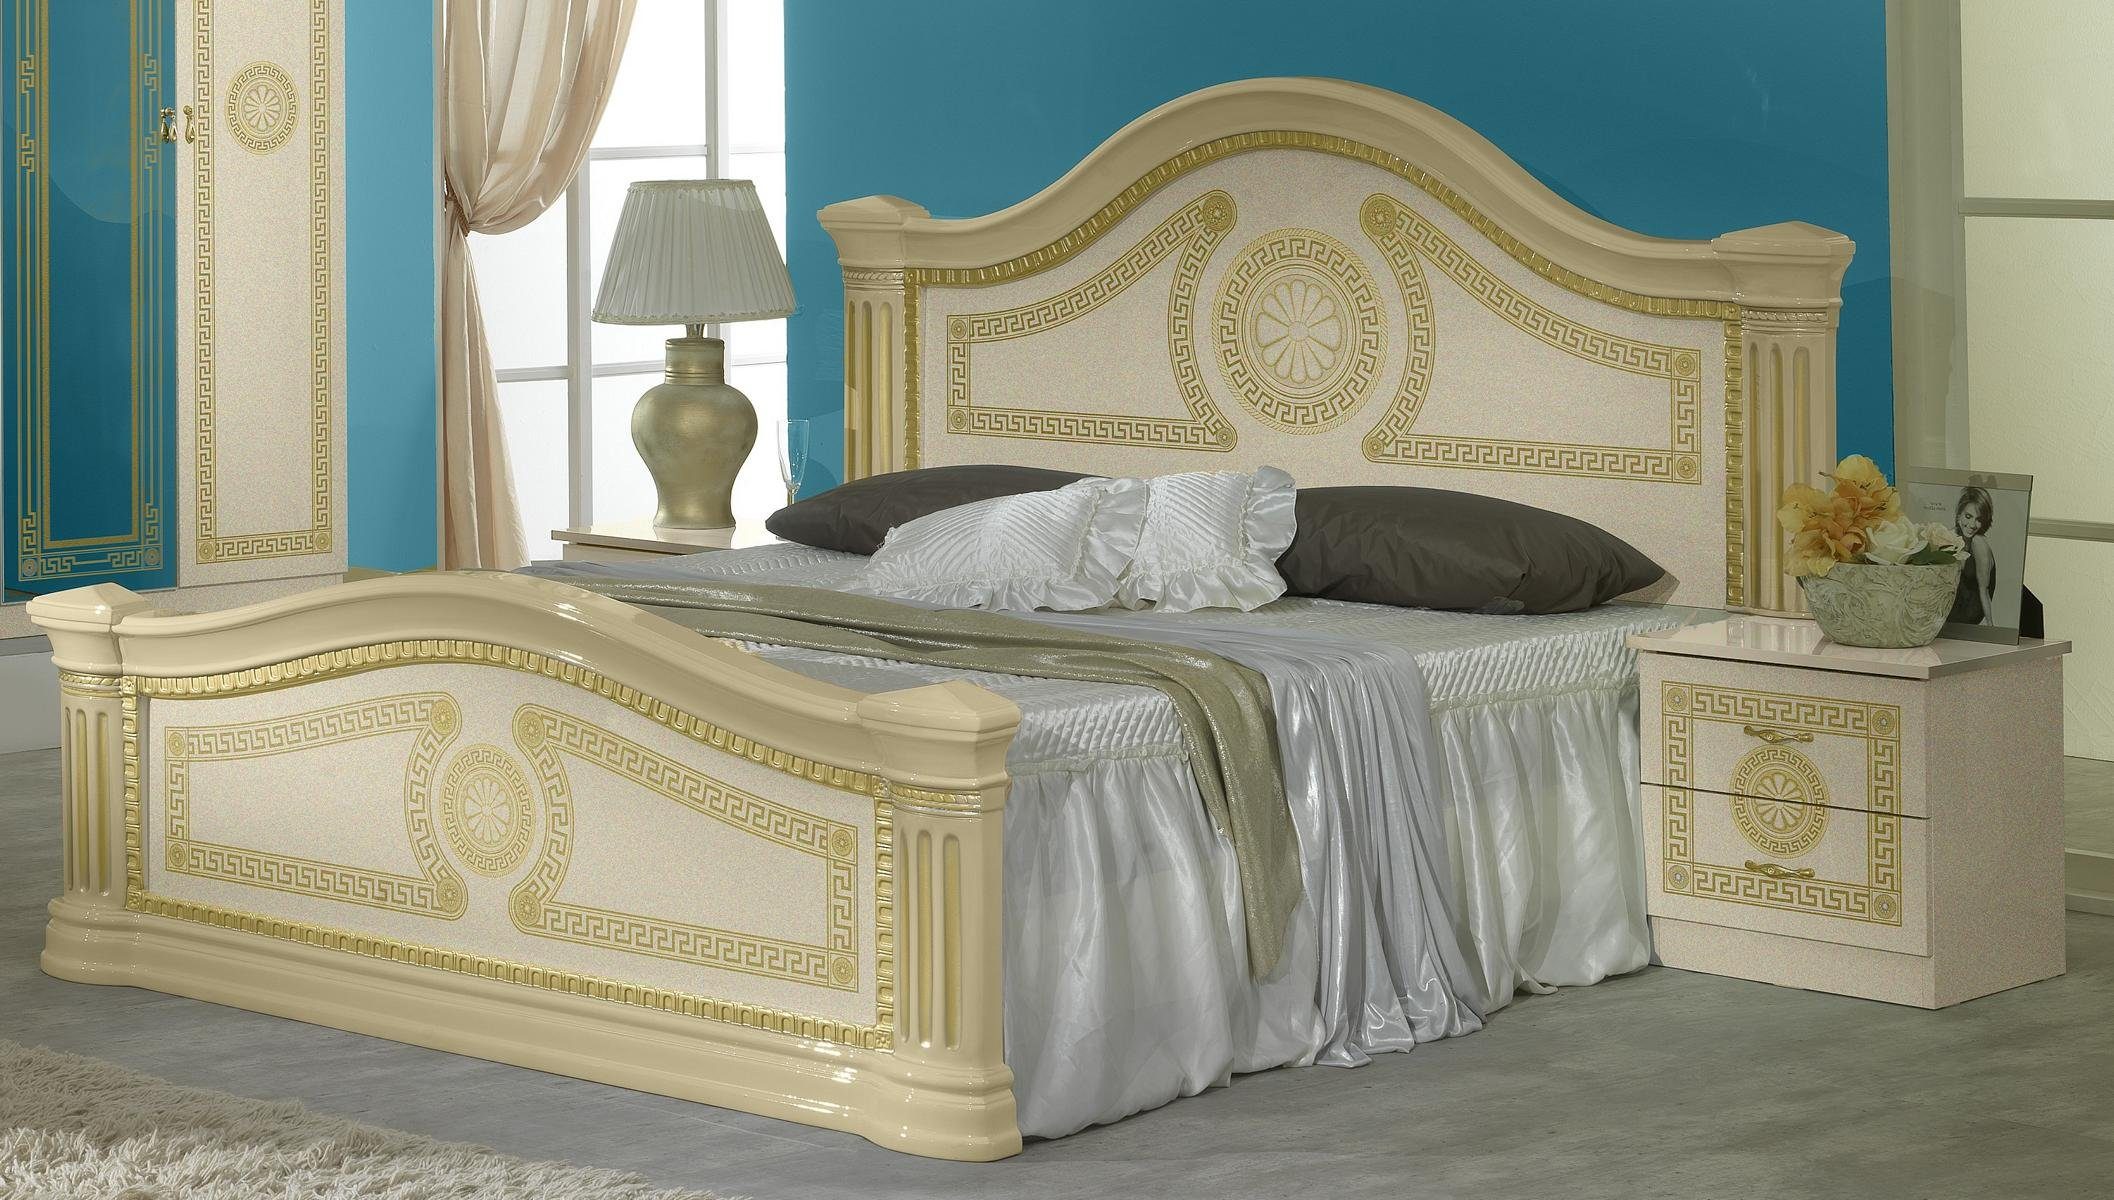 JVmoebel Bett Klassisches Bett Ehebett Doppelbett Sti Betten Polster Italienische